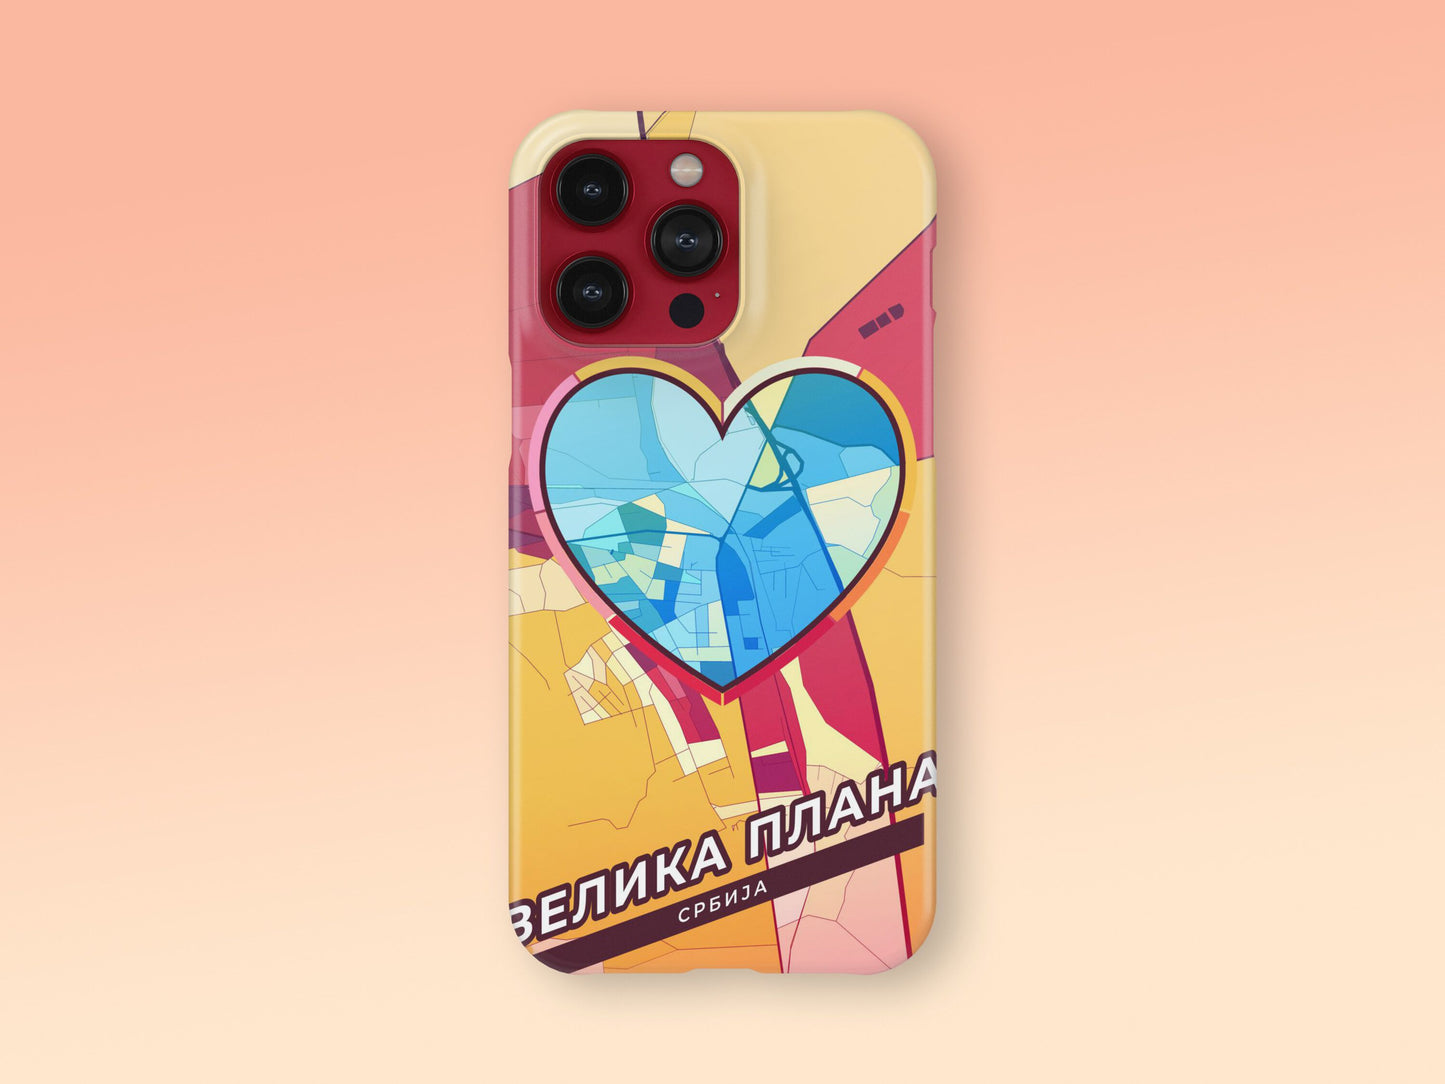 Velika Plana Serbia slim phone case with colorful icon 2